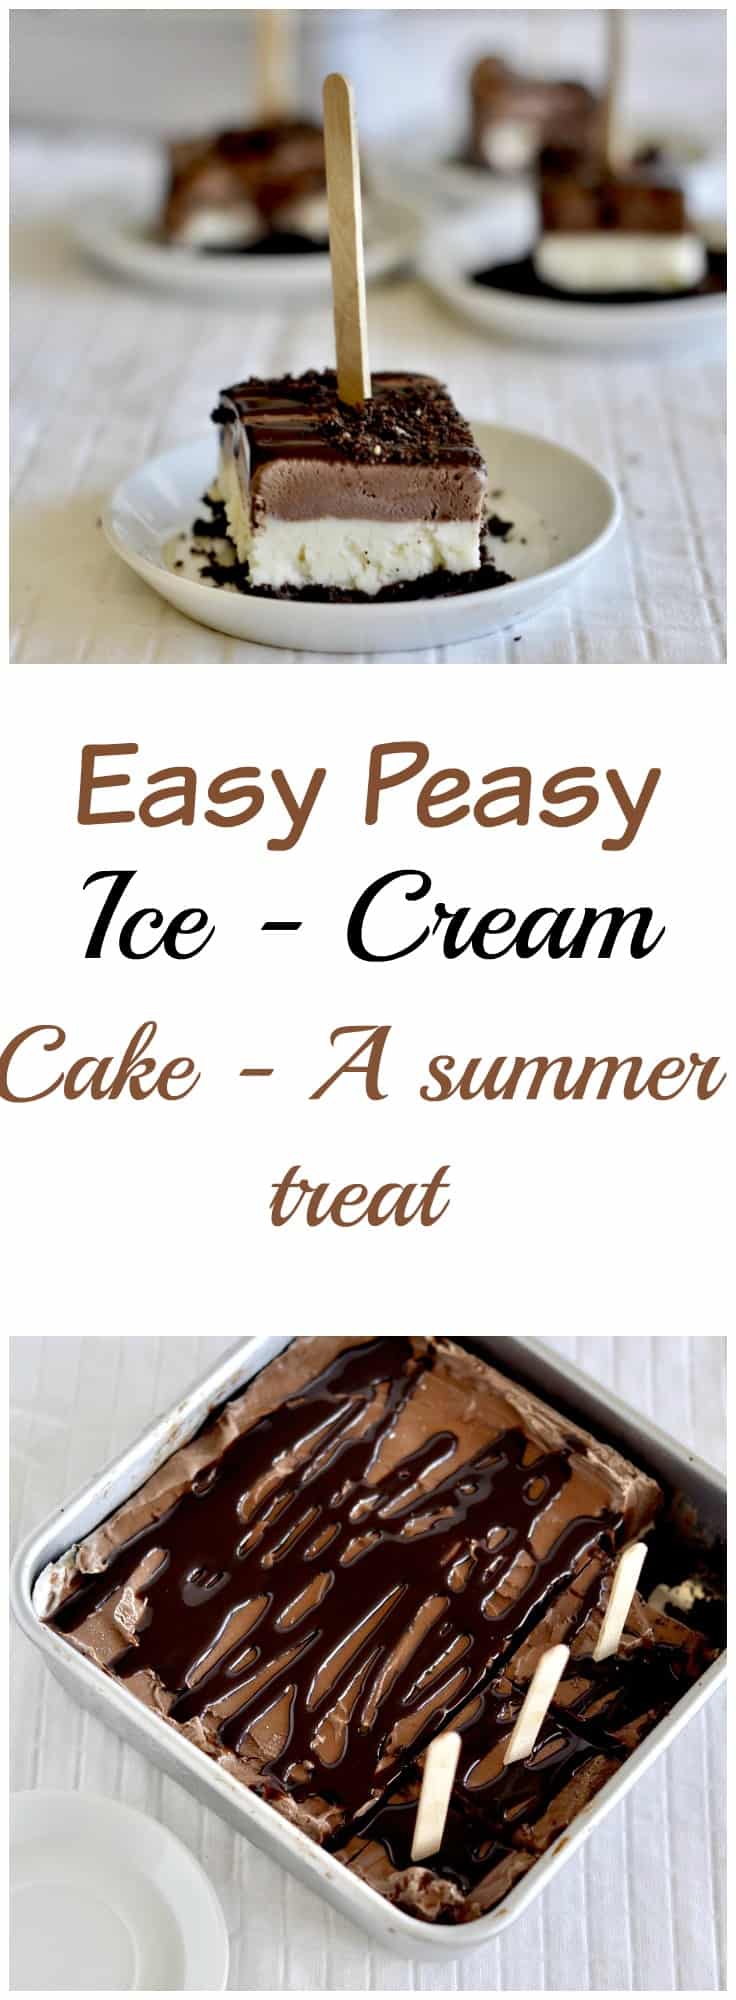 easy peasy ice cream cake summer treat cake recipe ice cream no churn easy simple photography